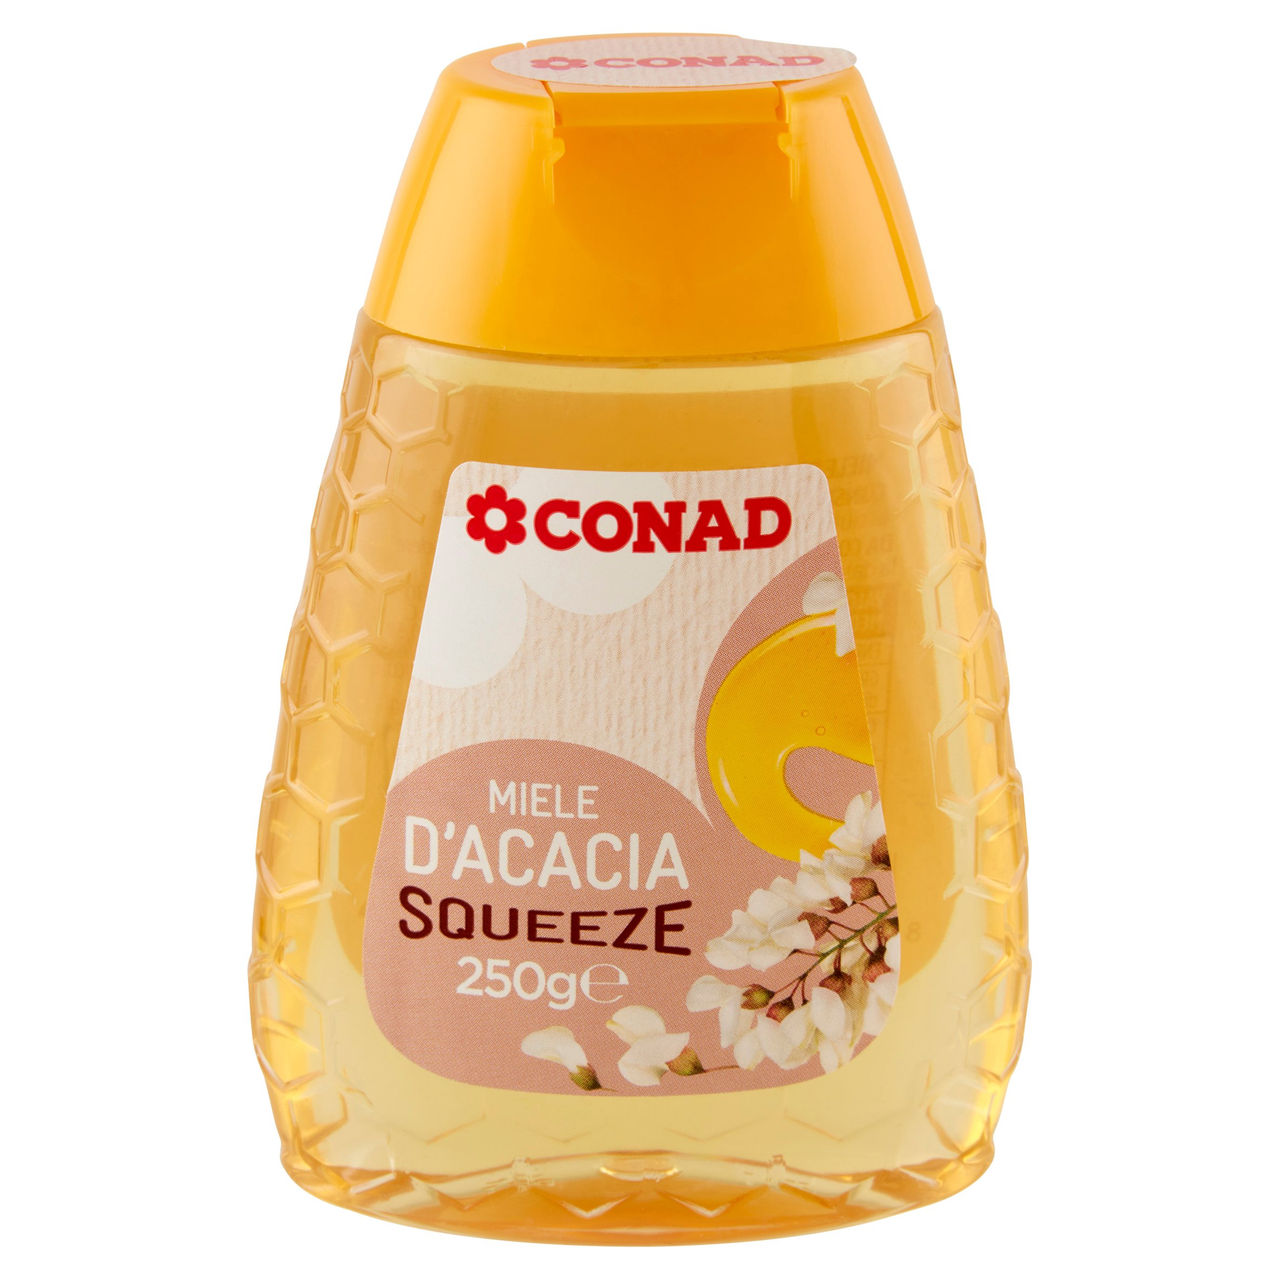 Miele d'Acacia Squeeze 250 g Conad